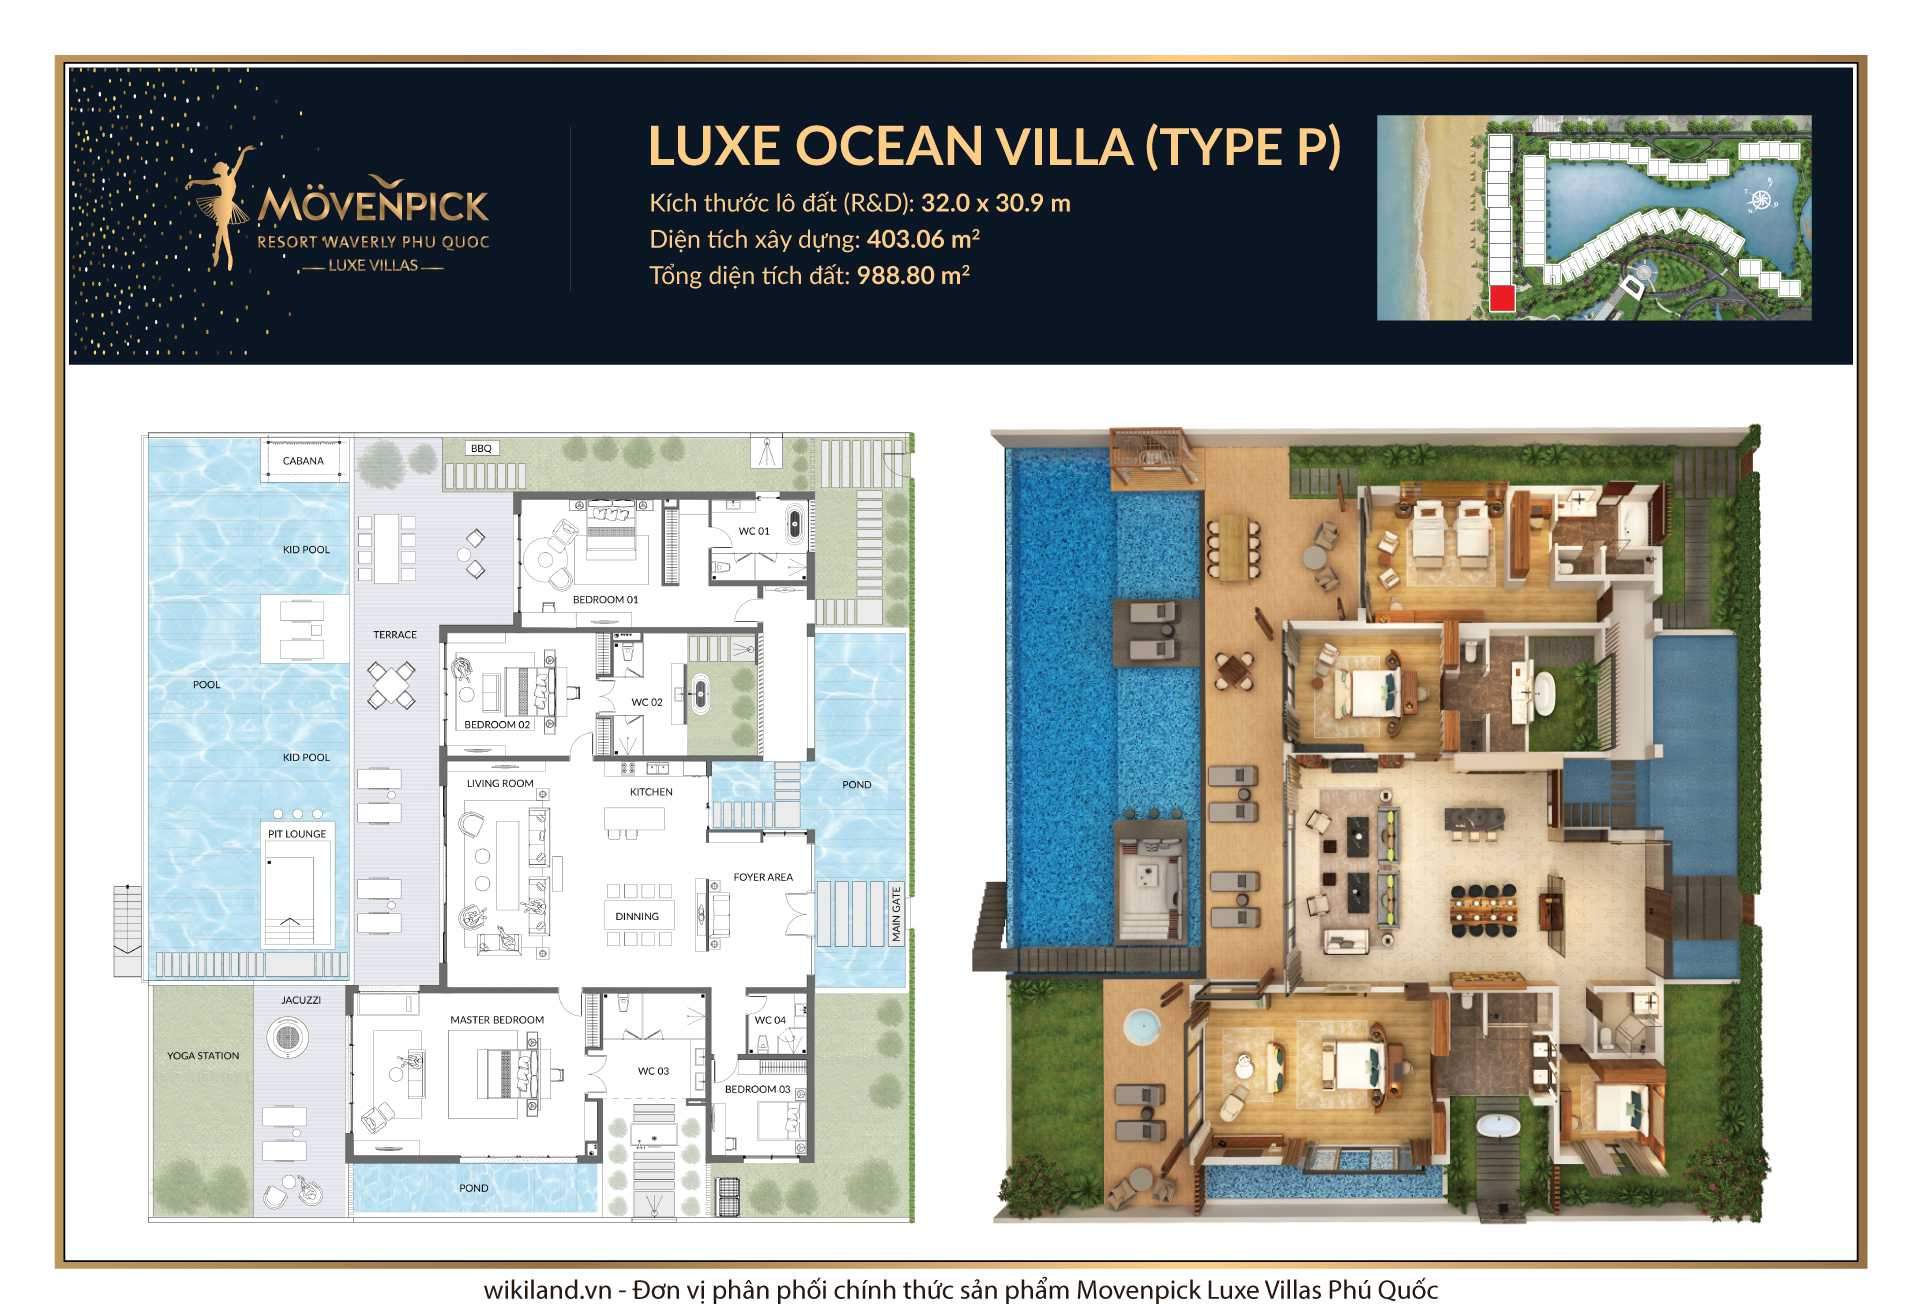 Biet thu movenpick luxe ocean villa type p wikiland vn